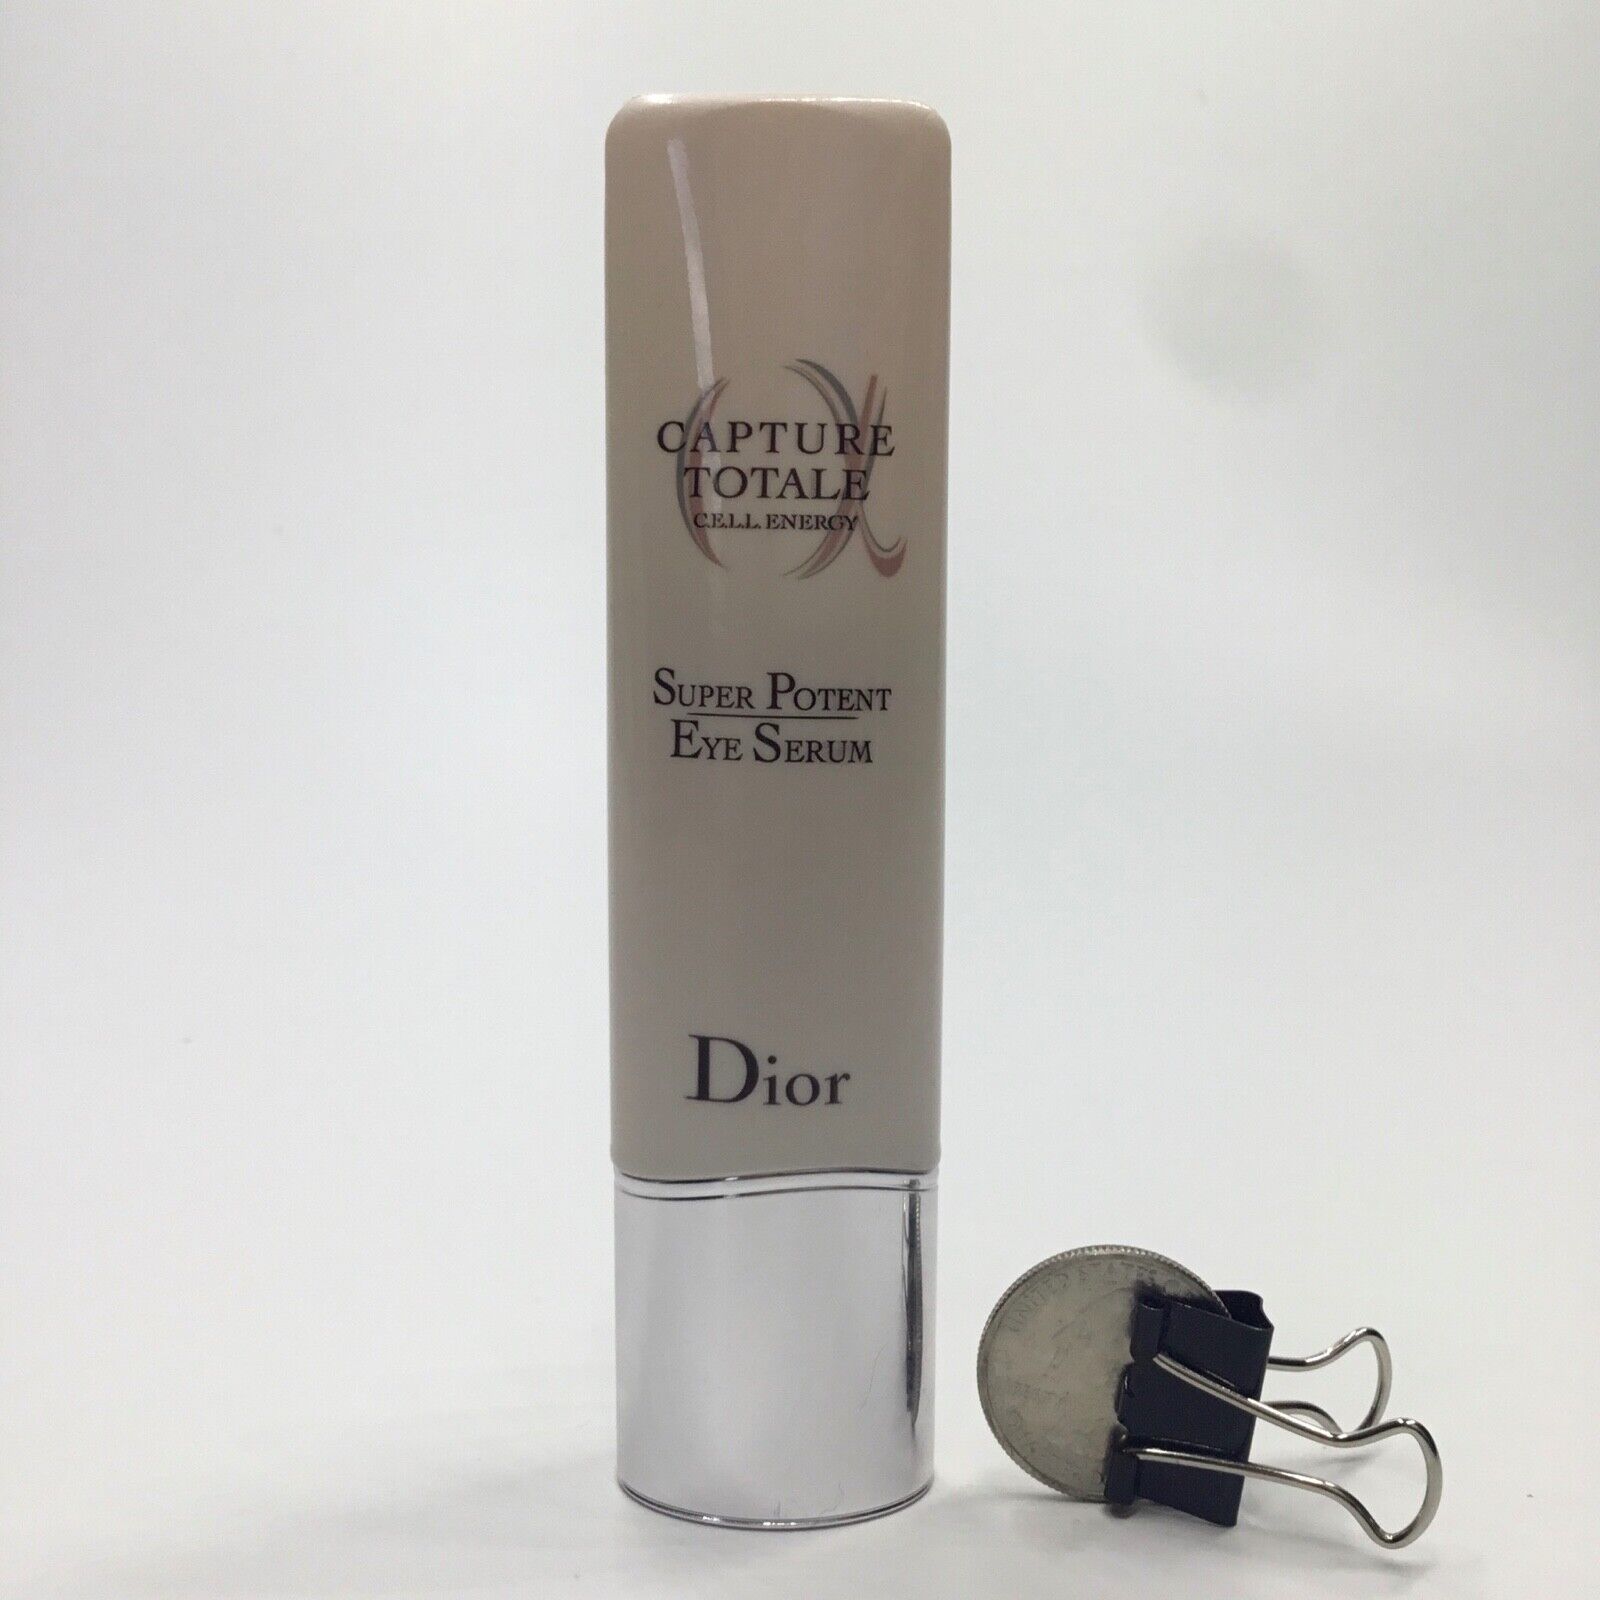 Christian Dior Capture Totale Super Potent Eye Serum 20 ml 0.67 oz SEE PICS READ